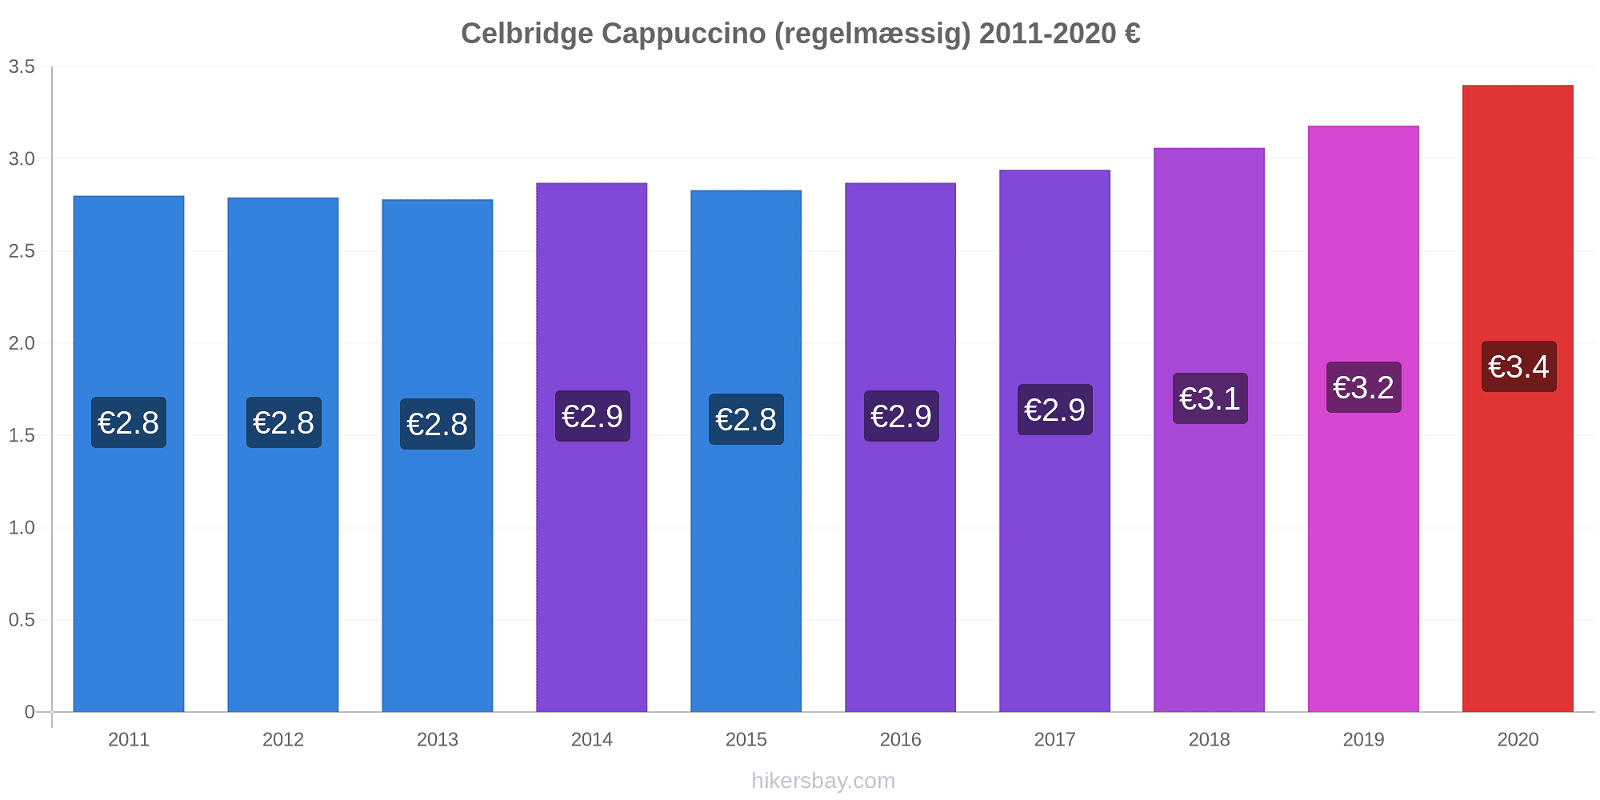 Celbridge prisændringer Cappuccino (regelmæssig) hikersbay.com